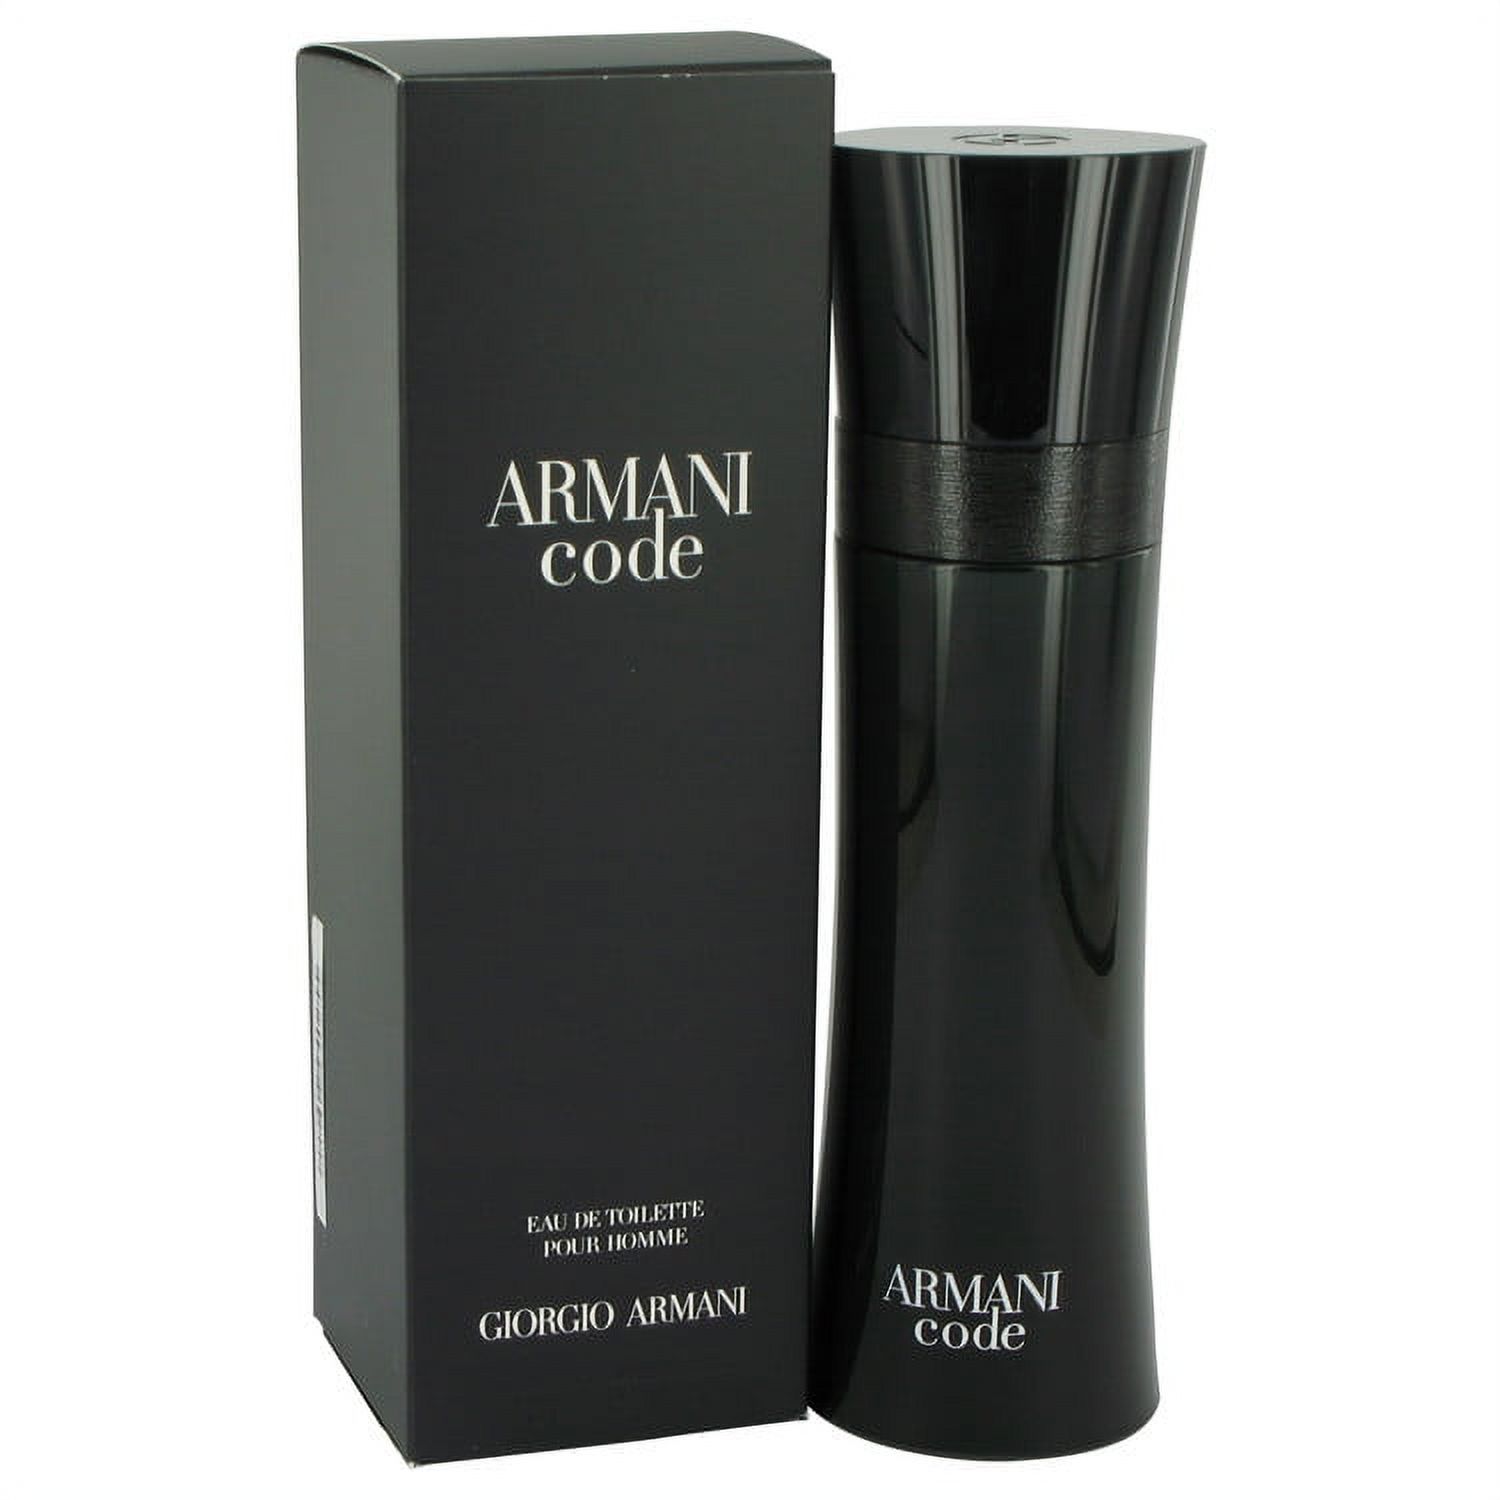 Giorgio Armani Code Eau de Toilette, Perfume for Women, 4.2 Oz Full Size - image 1 of 4